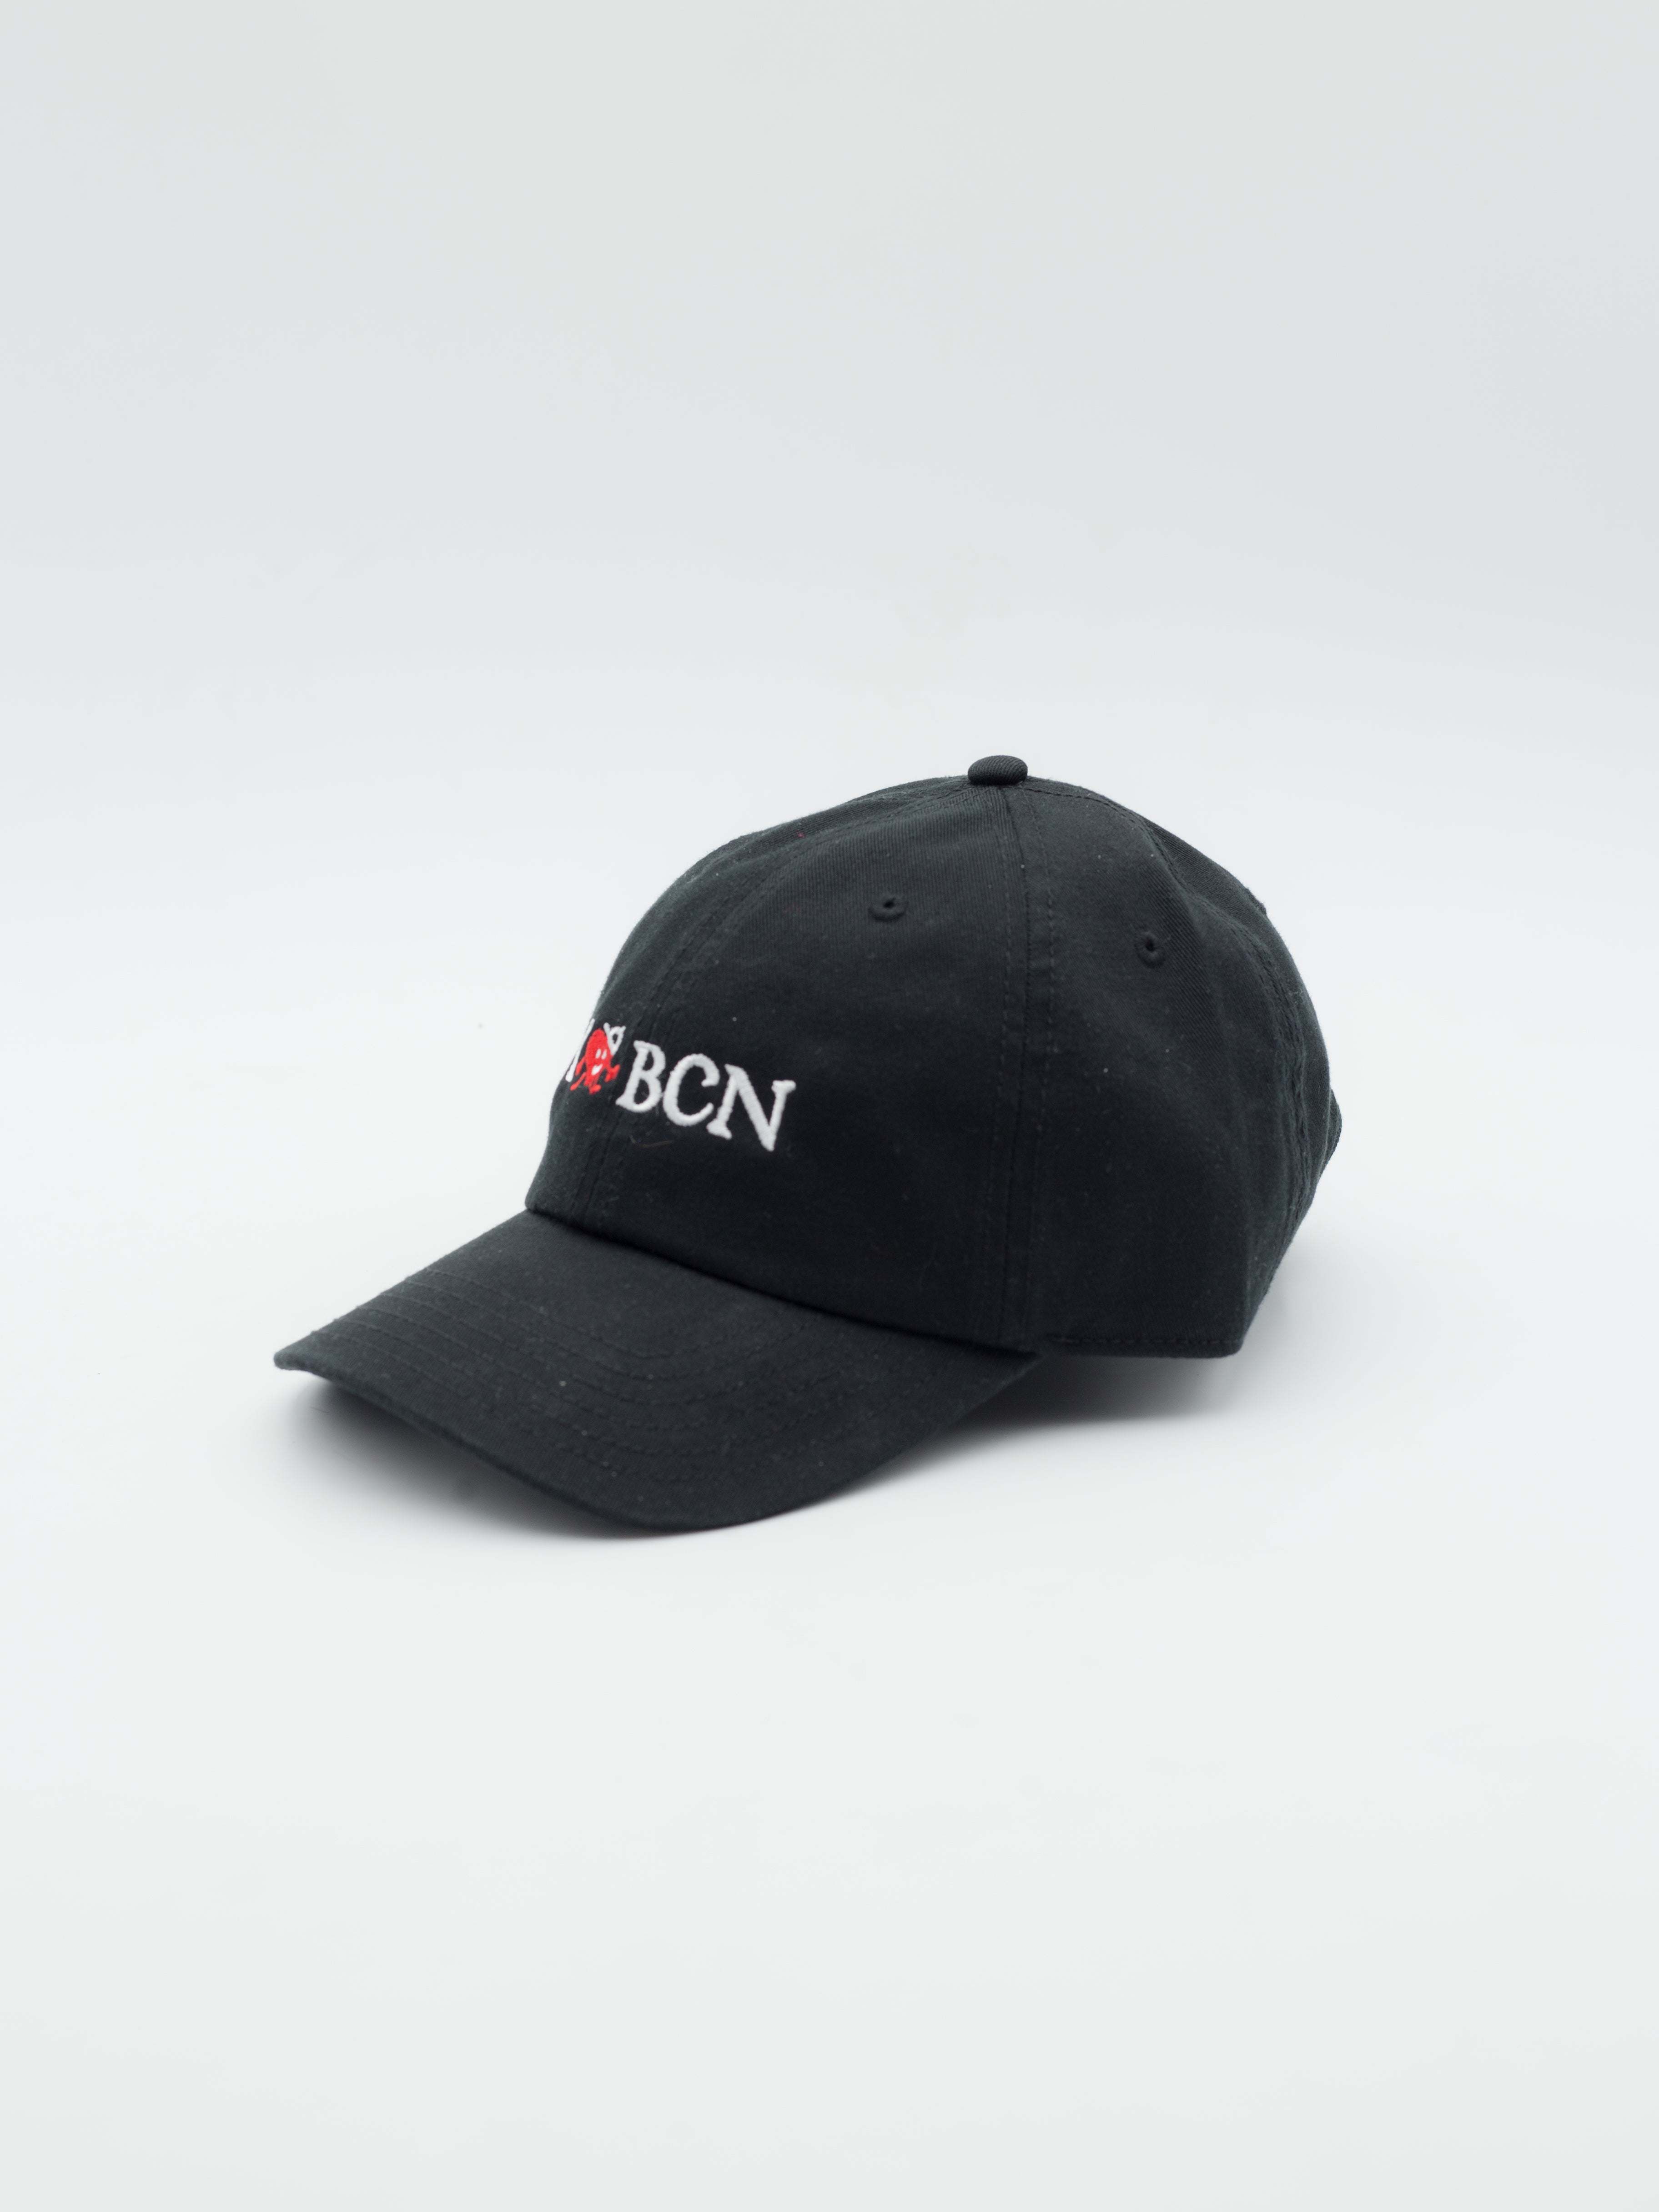 We Love BCN Dad Hat Black